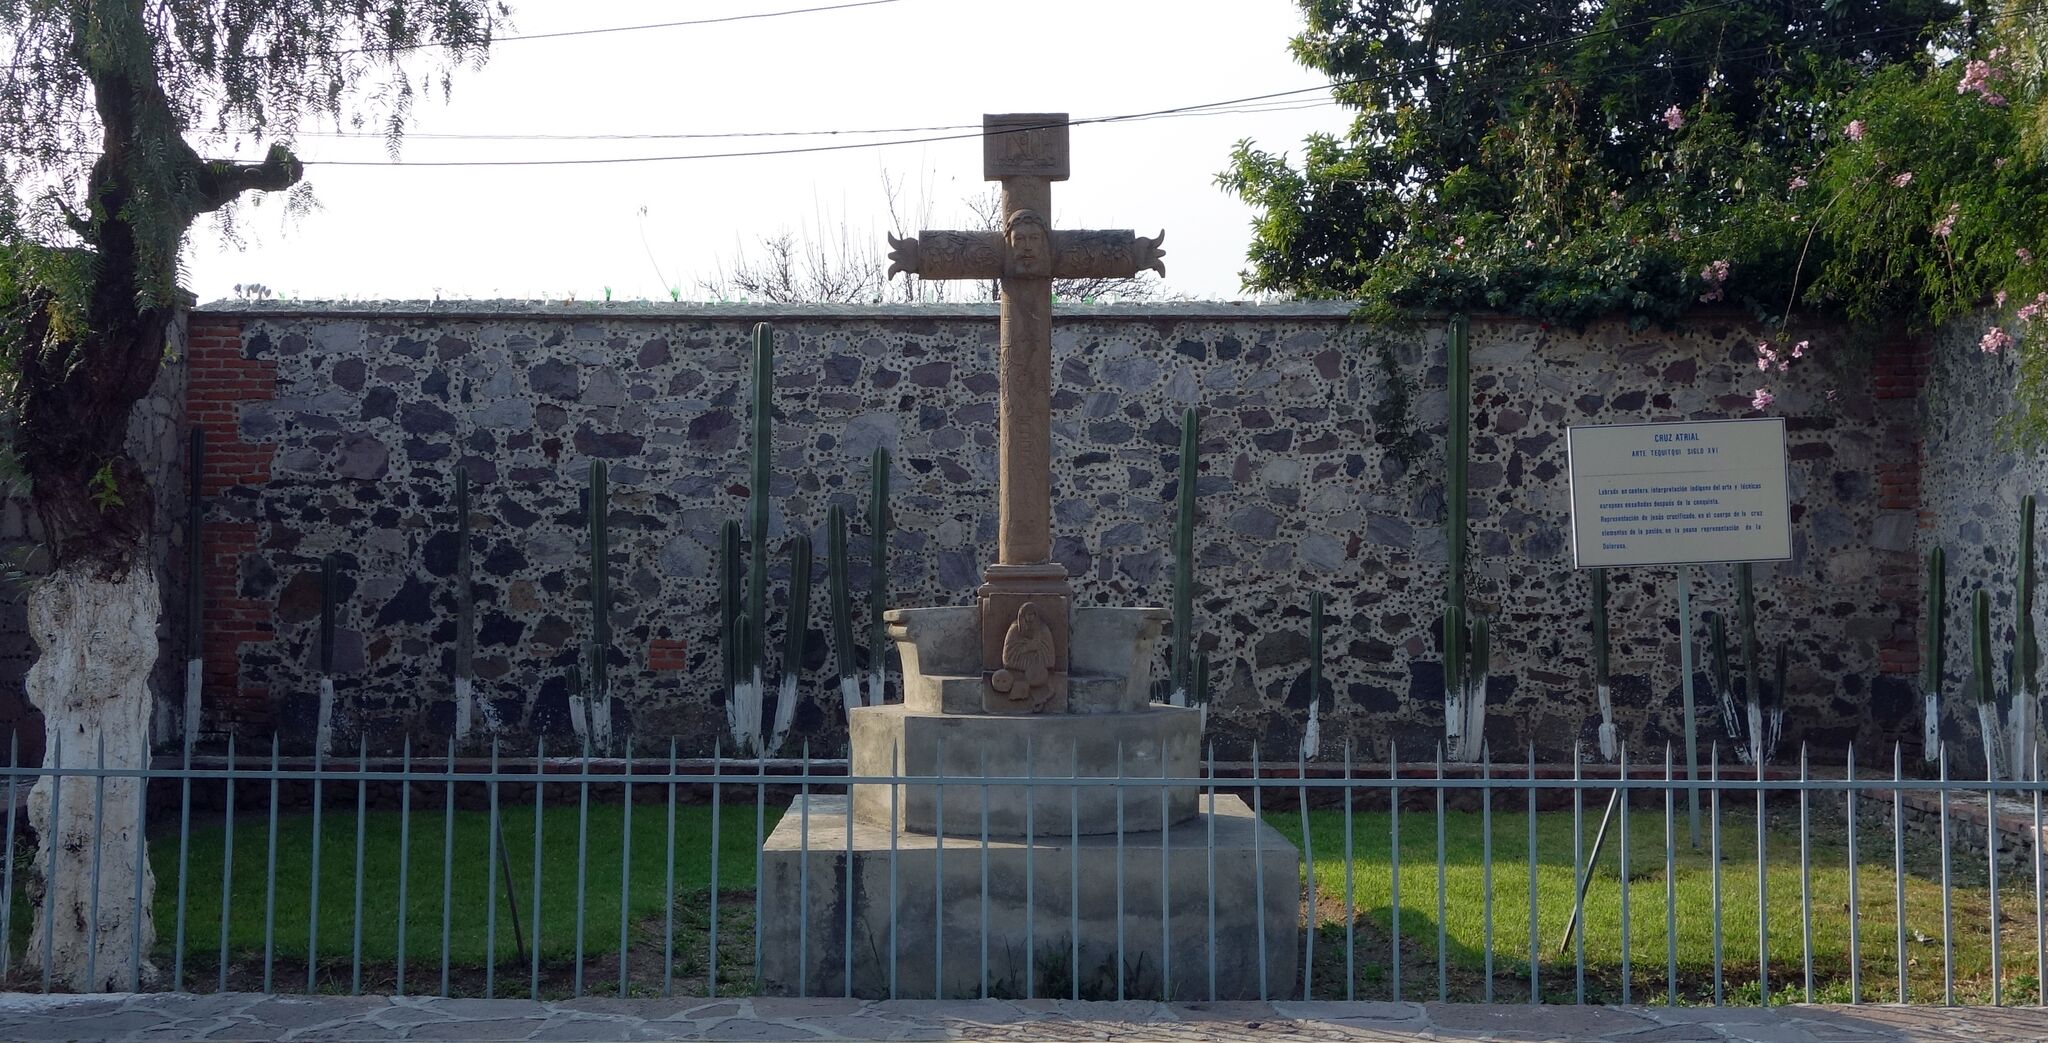 Atrial Cross, convento San Agustín de Acolman, mid-16th century (now located across the street from the convento) (photo: Steven Zucker, CC BY-NC-SA 2.0)